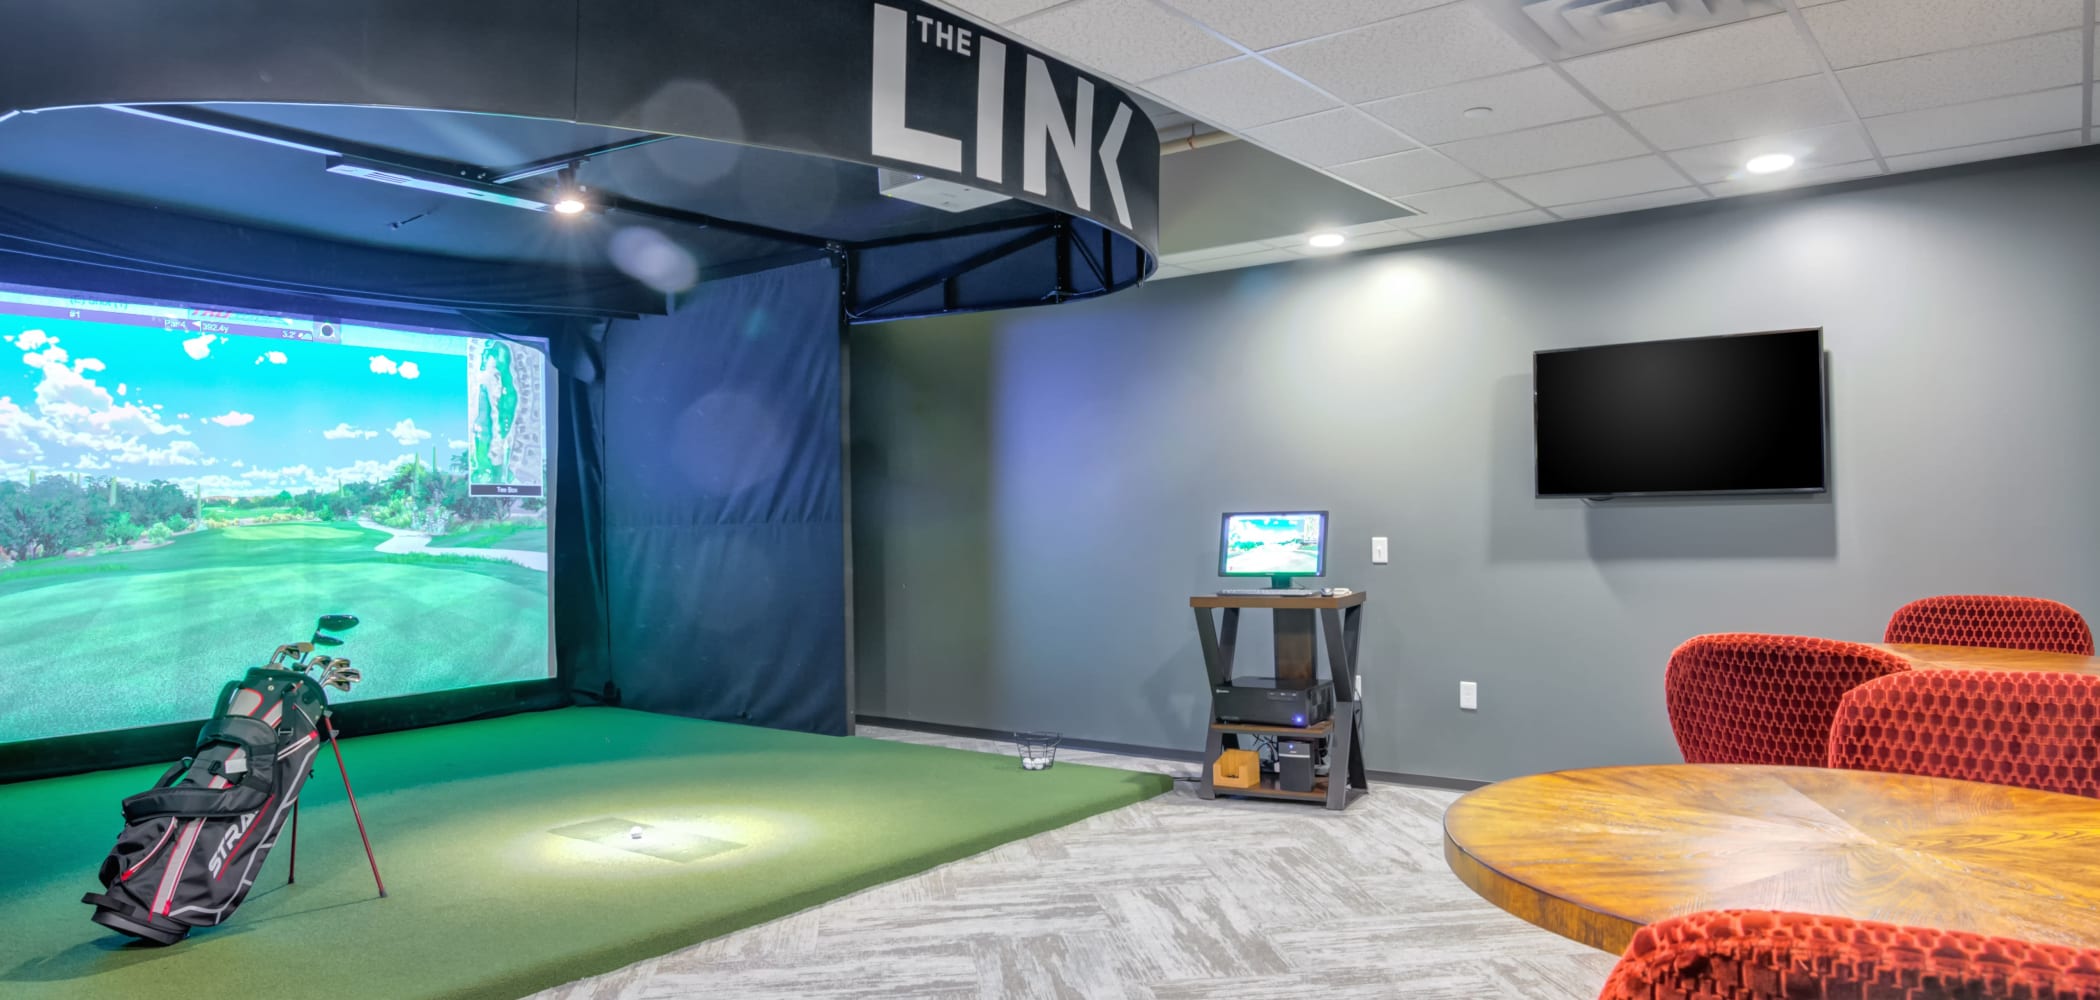 Indoor golf simulation at The Link Minneapolis in Minneapolis, Minnesota